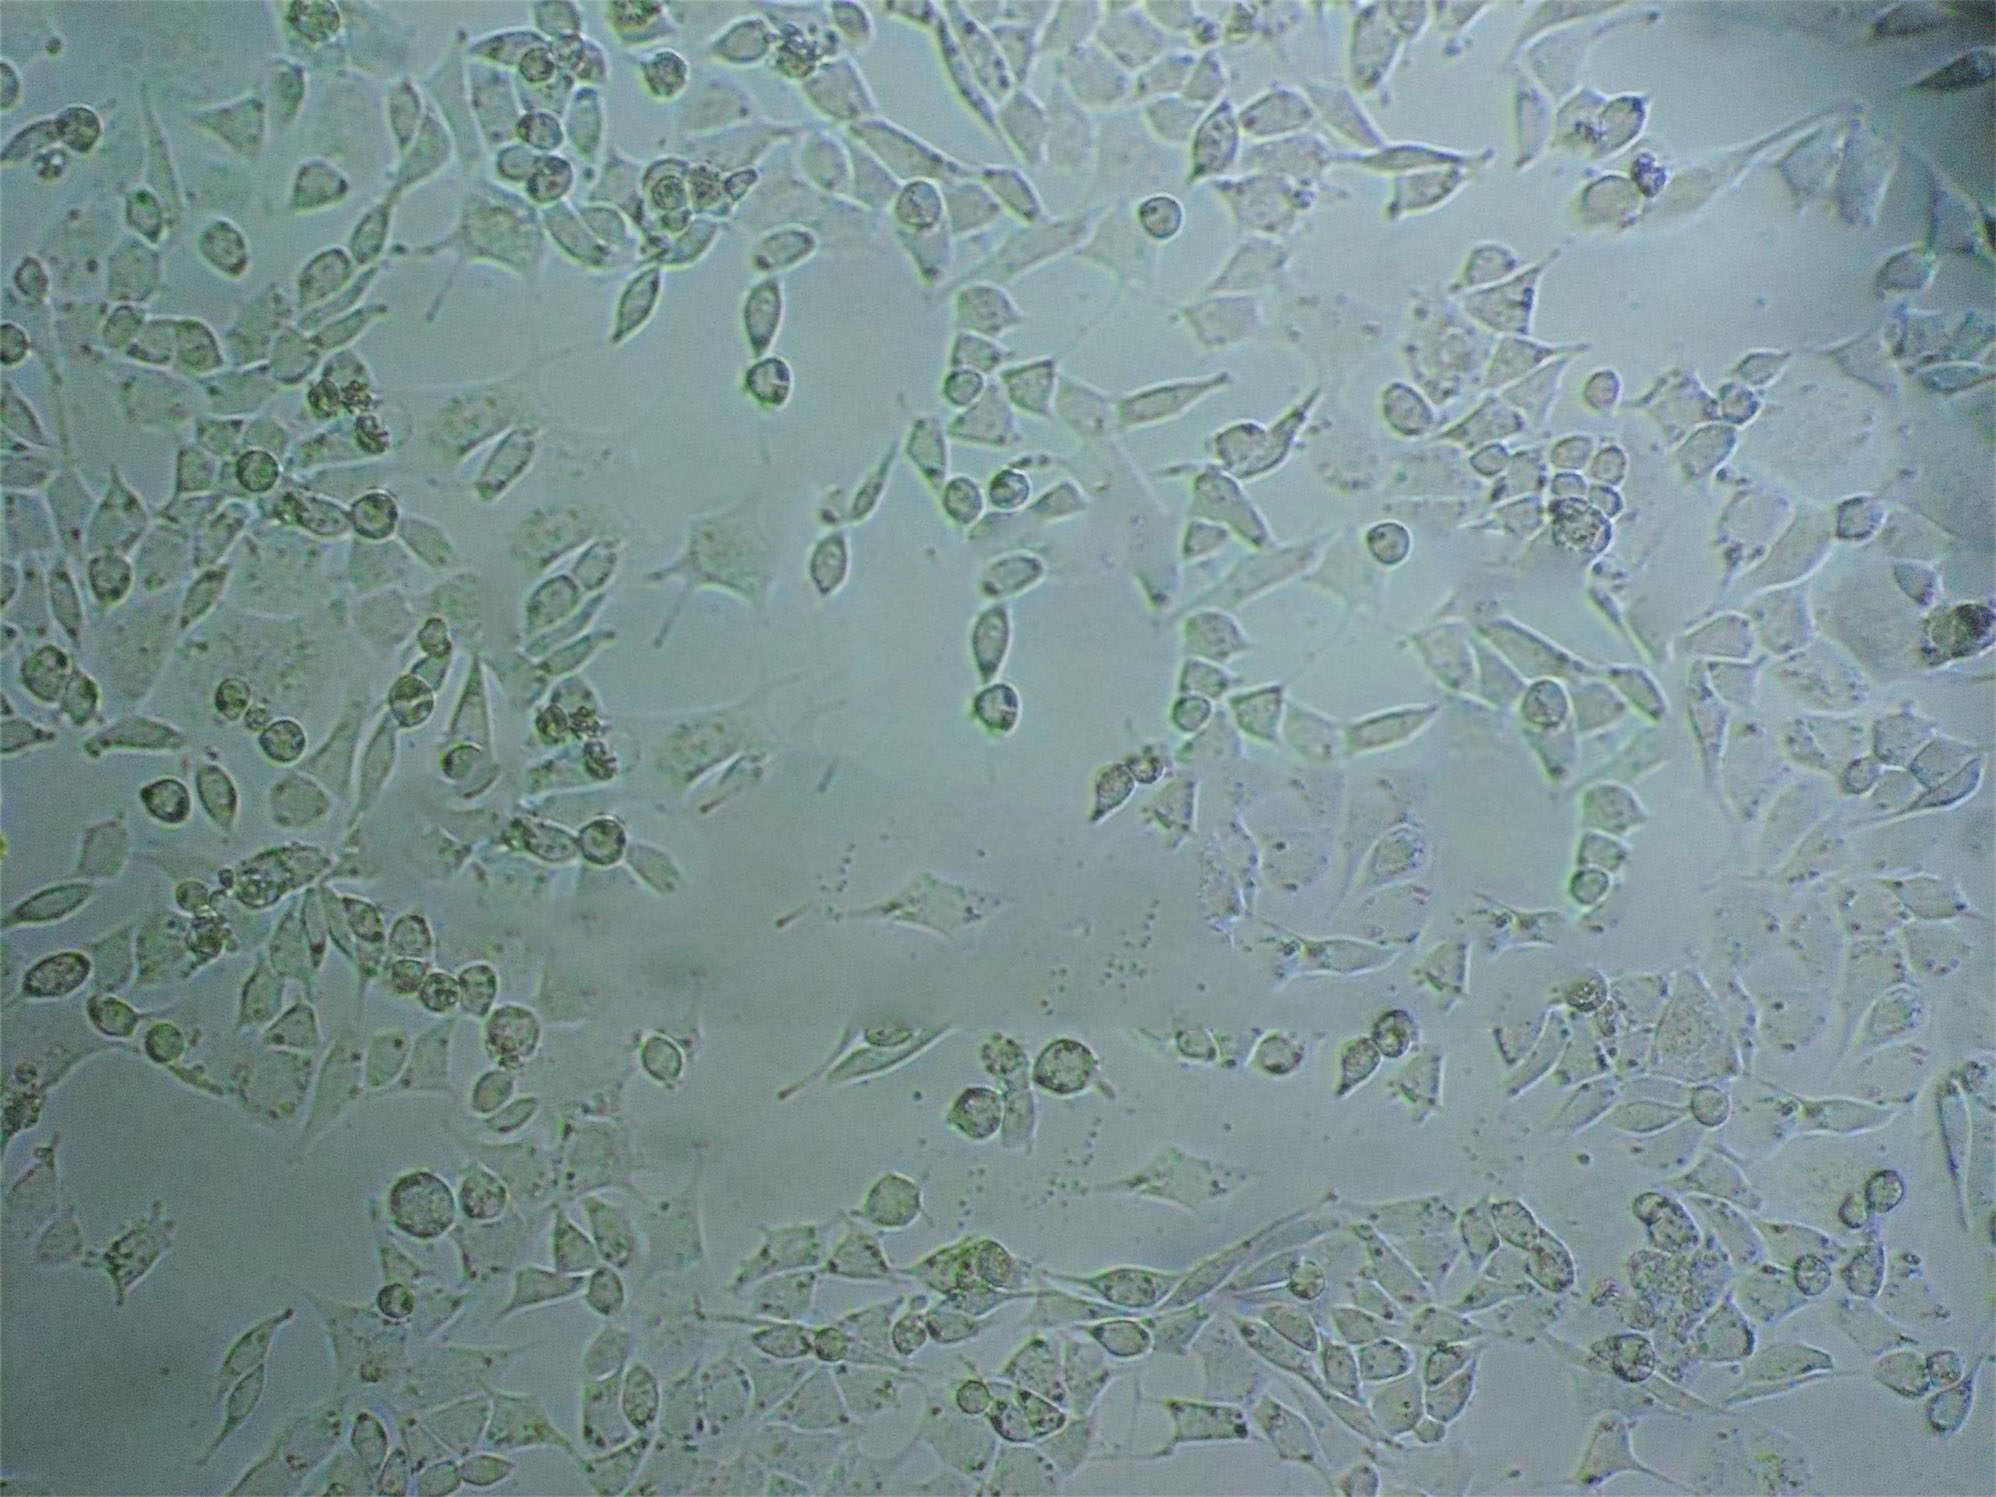 Walker-256-TC cell line大鼠乳腺癌细胞系